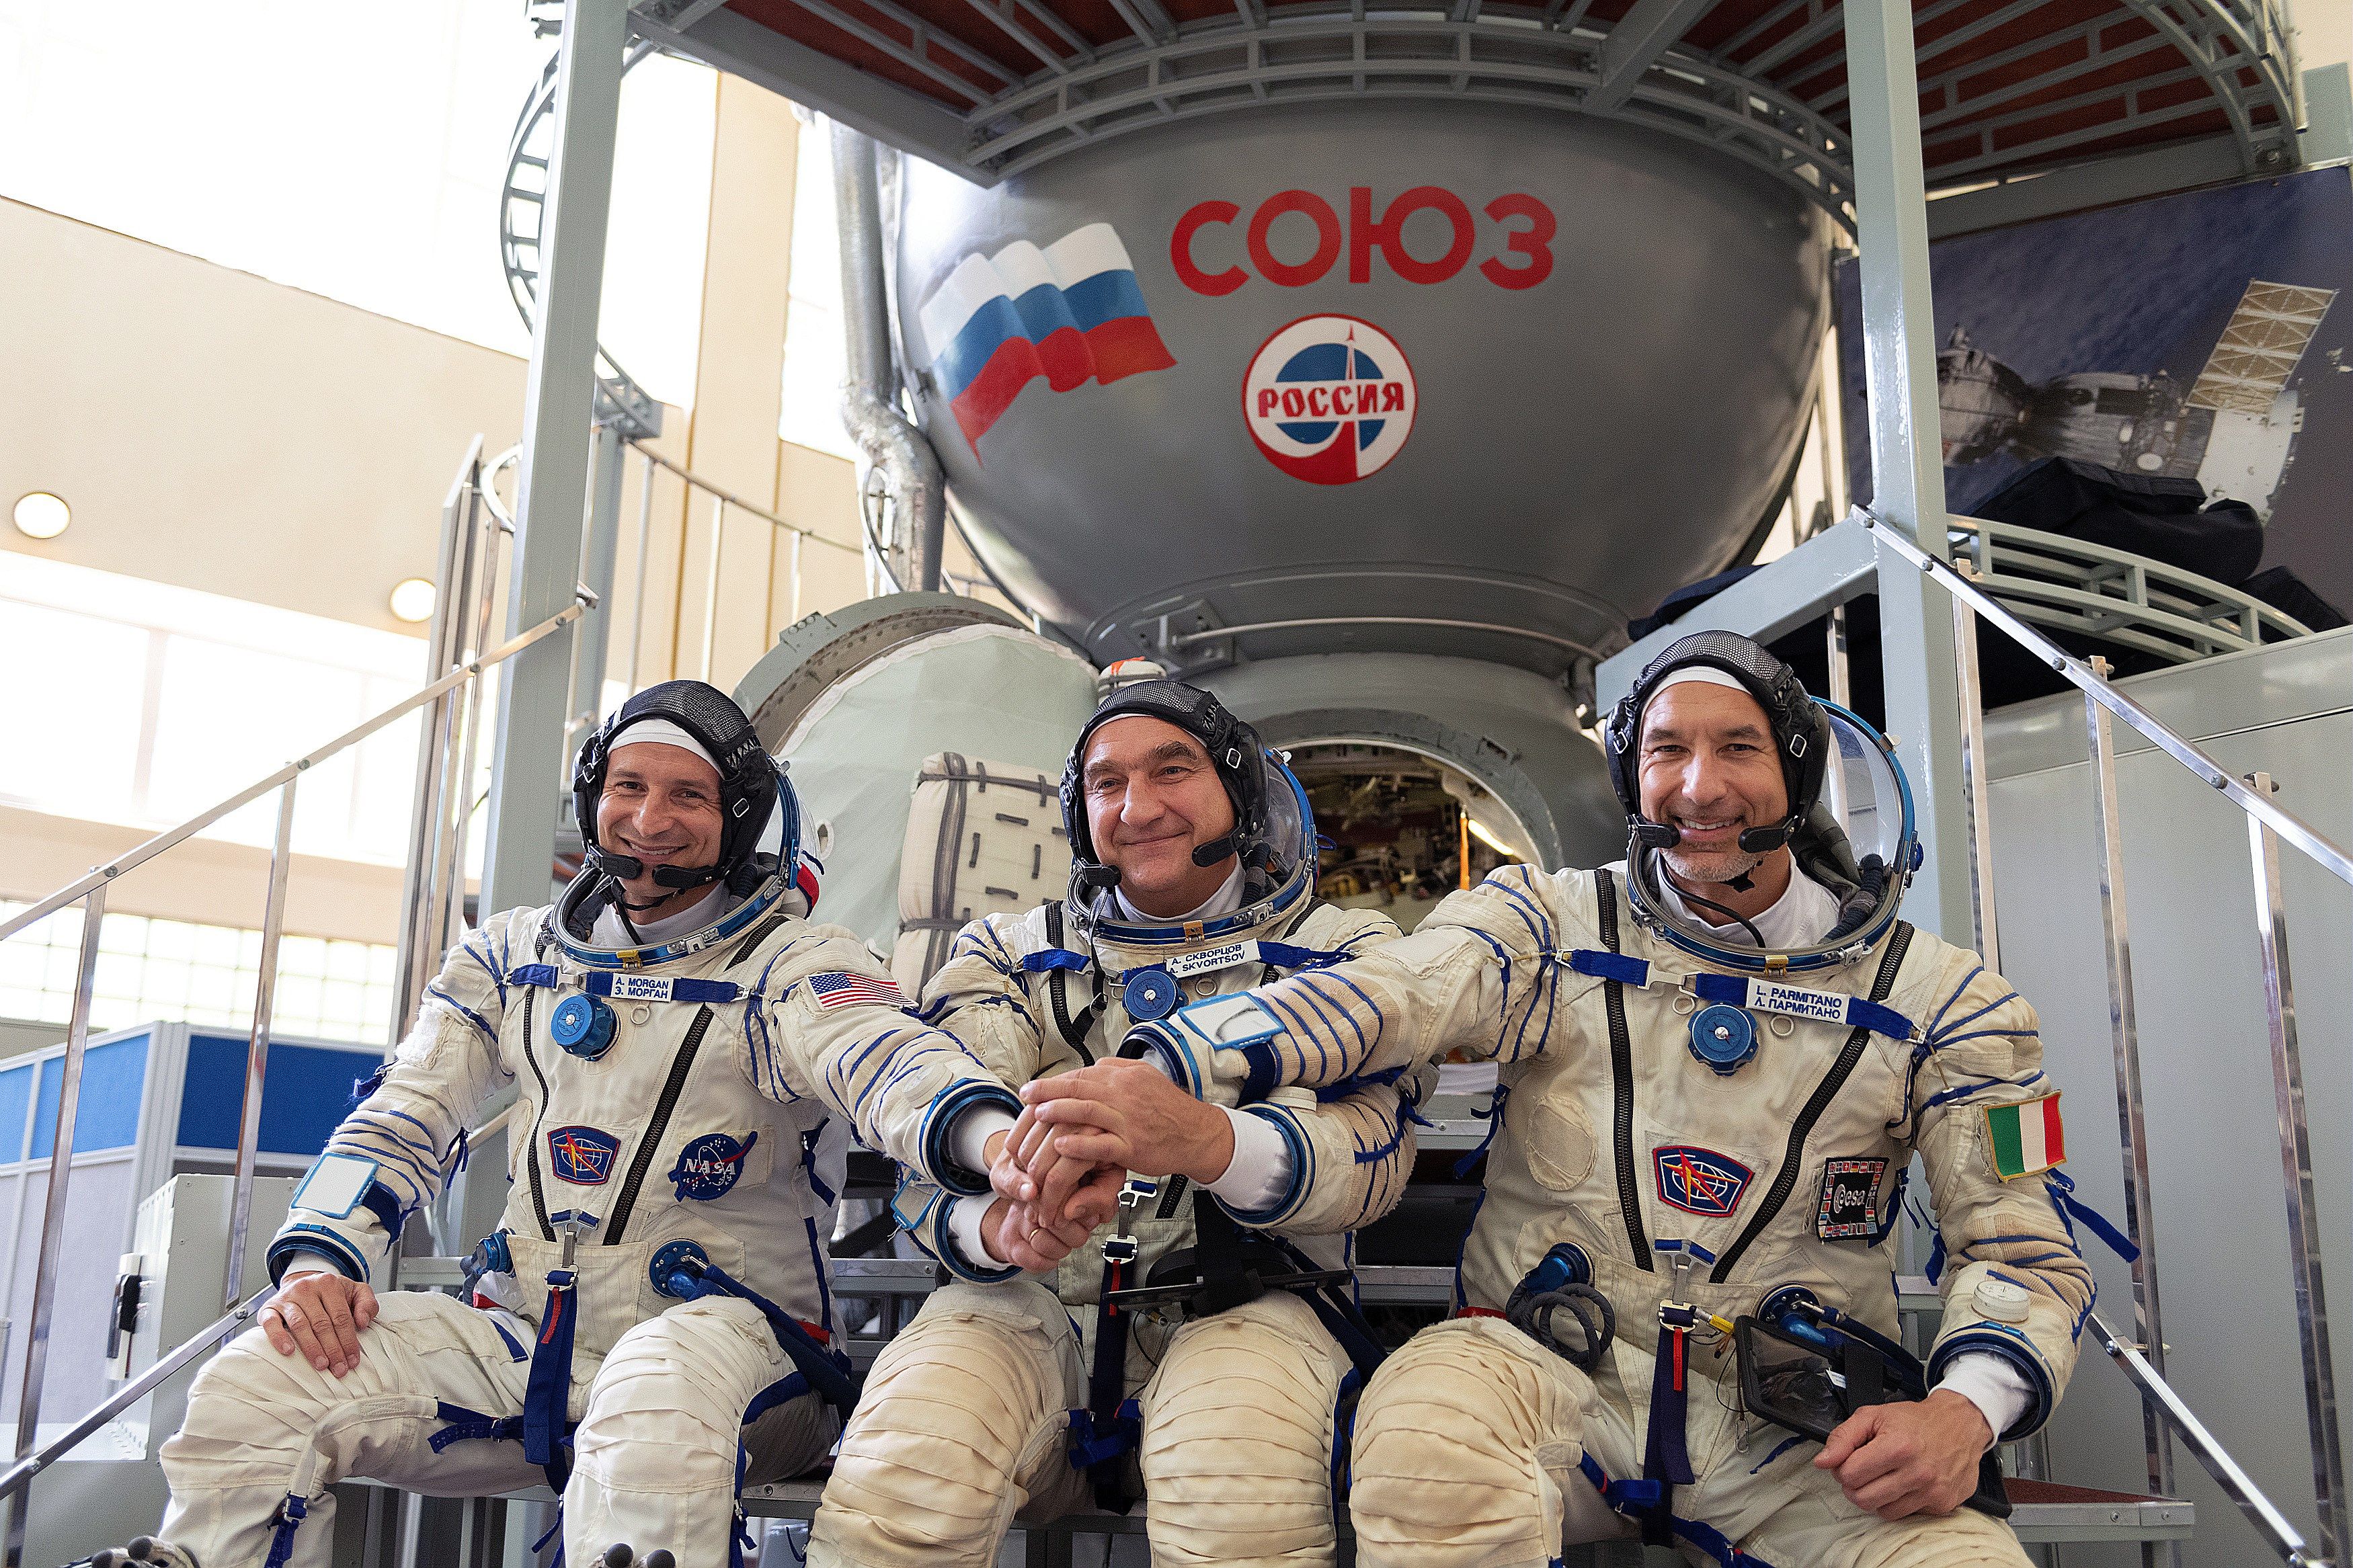  Nave rusa Soyuz despega rumbo a Estación Espacial en homenaje al Apolo 11